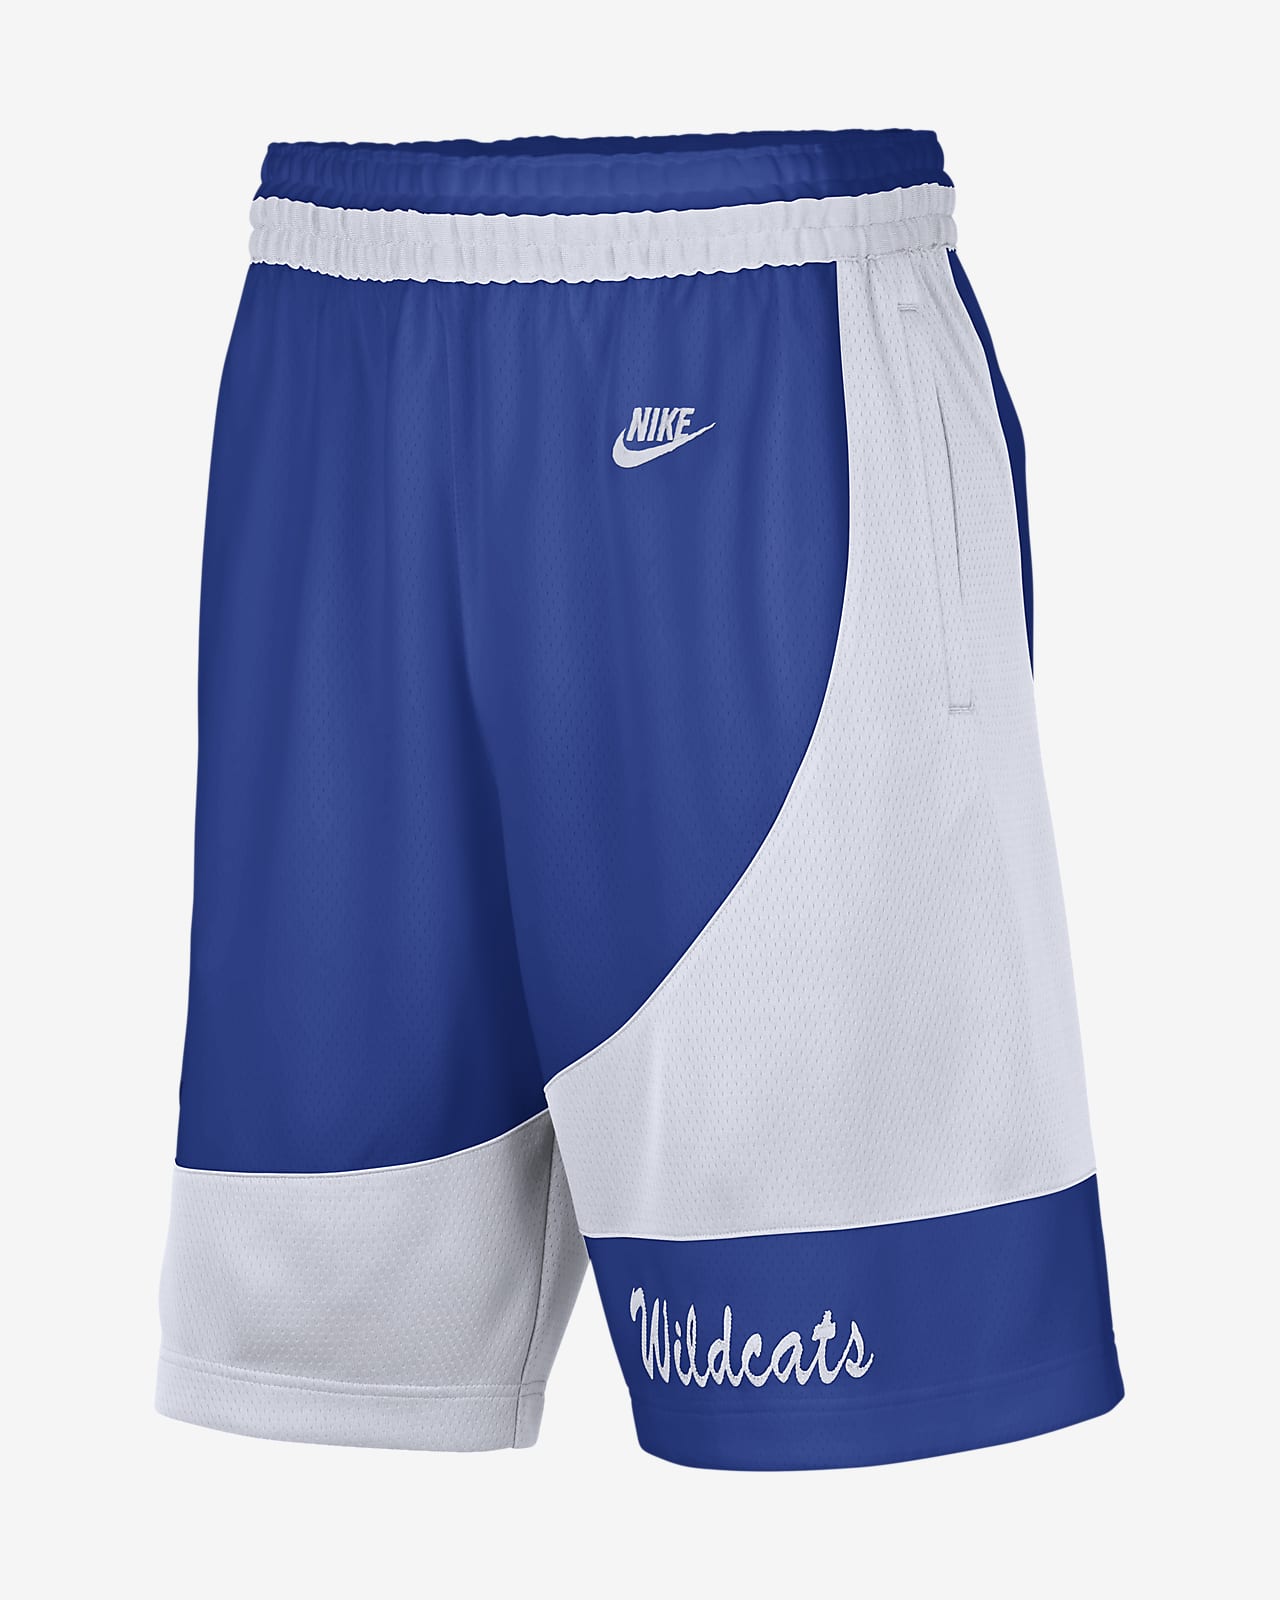 Shorts de básquetbol Nike Dri-FIT College para hombre Kentucky Limited